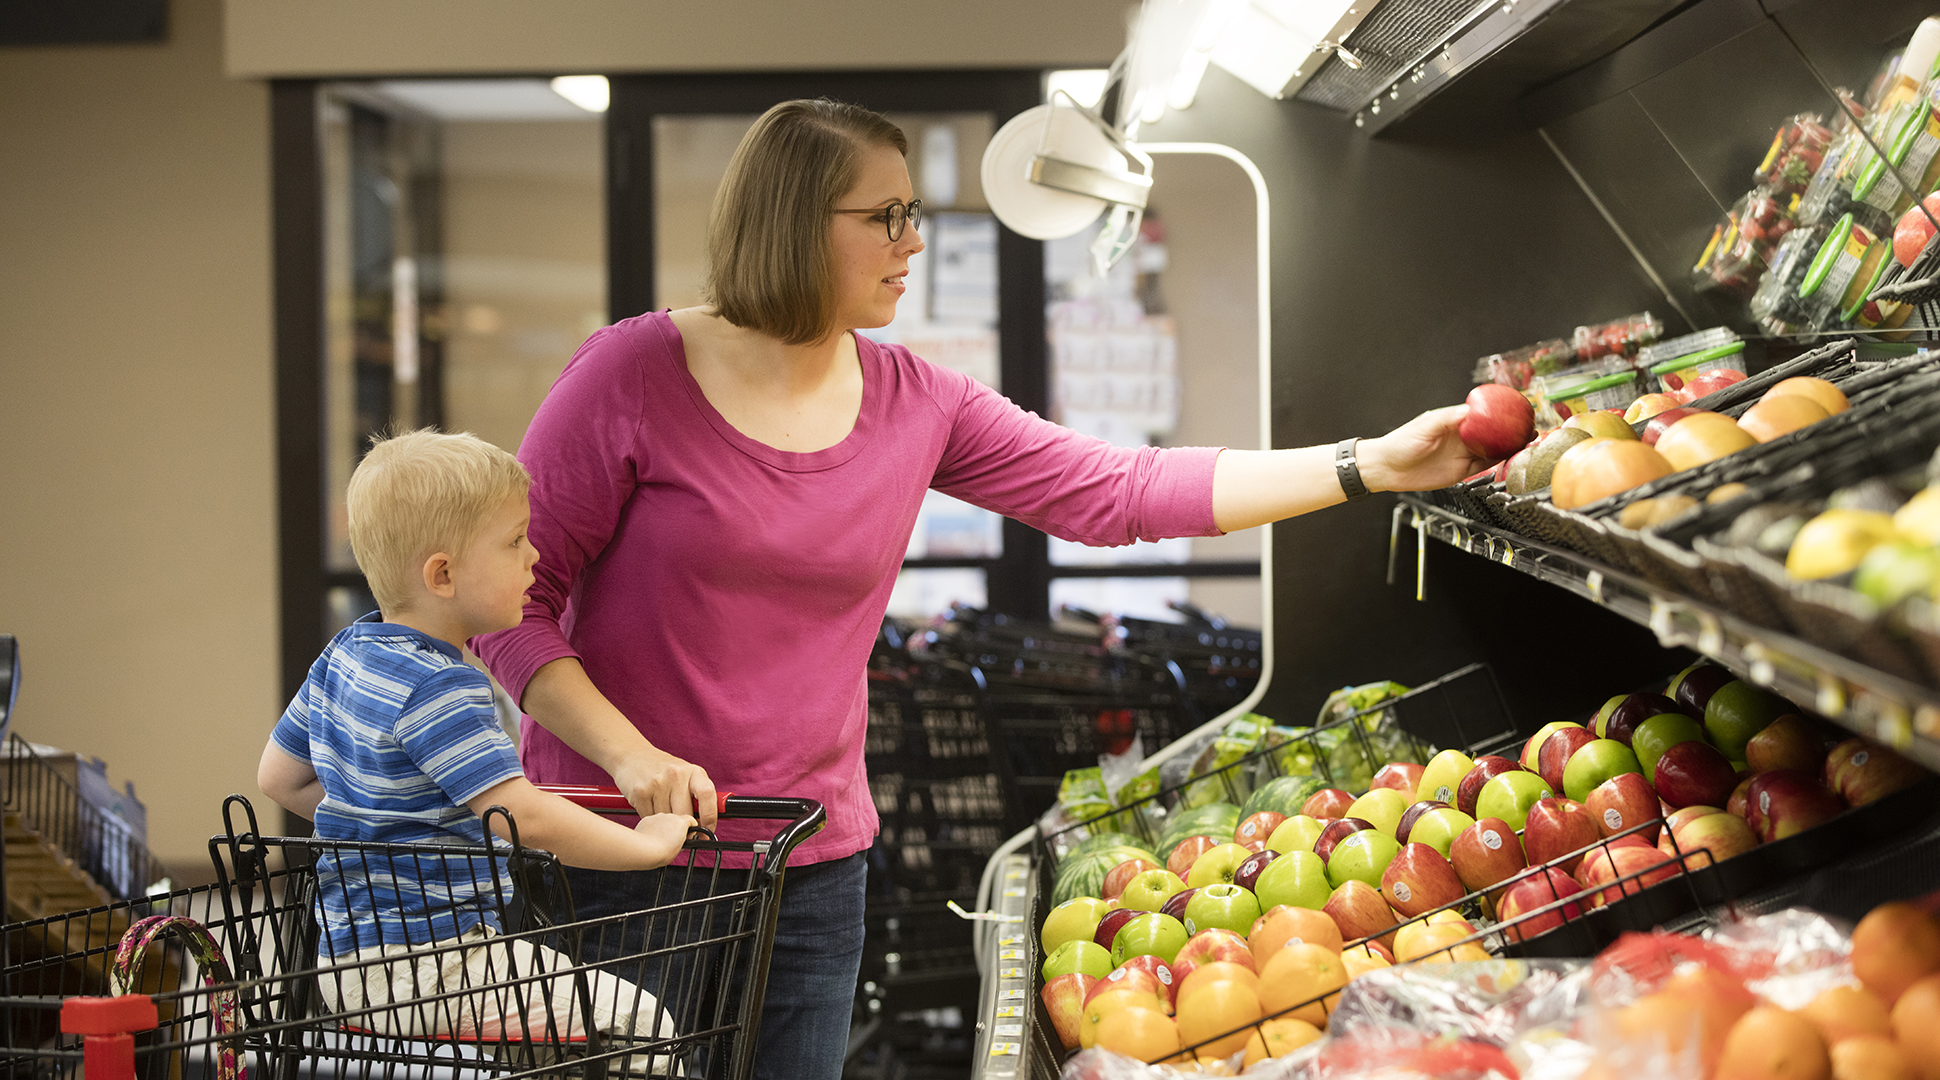 U.S. boasts most affordable grocery basket